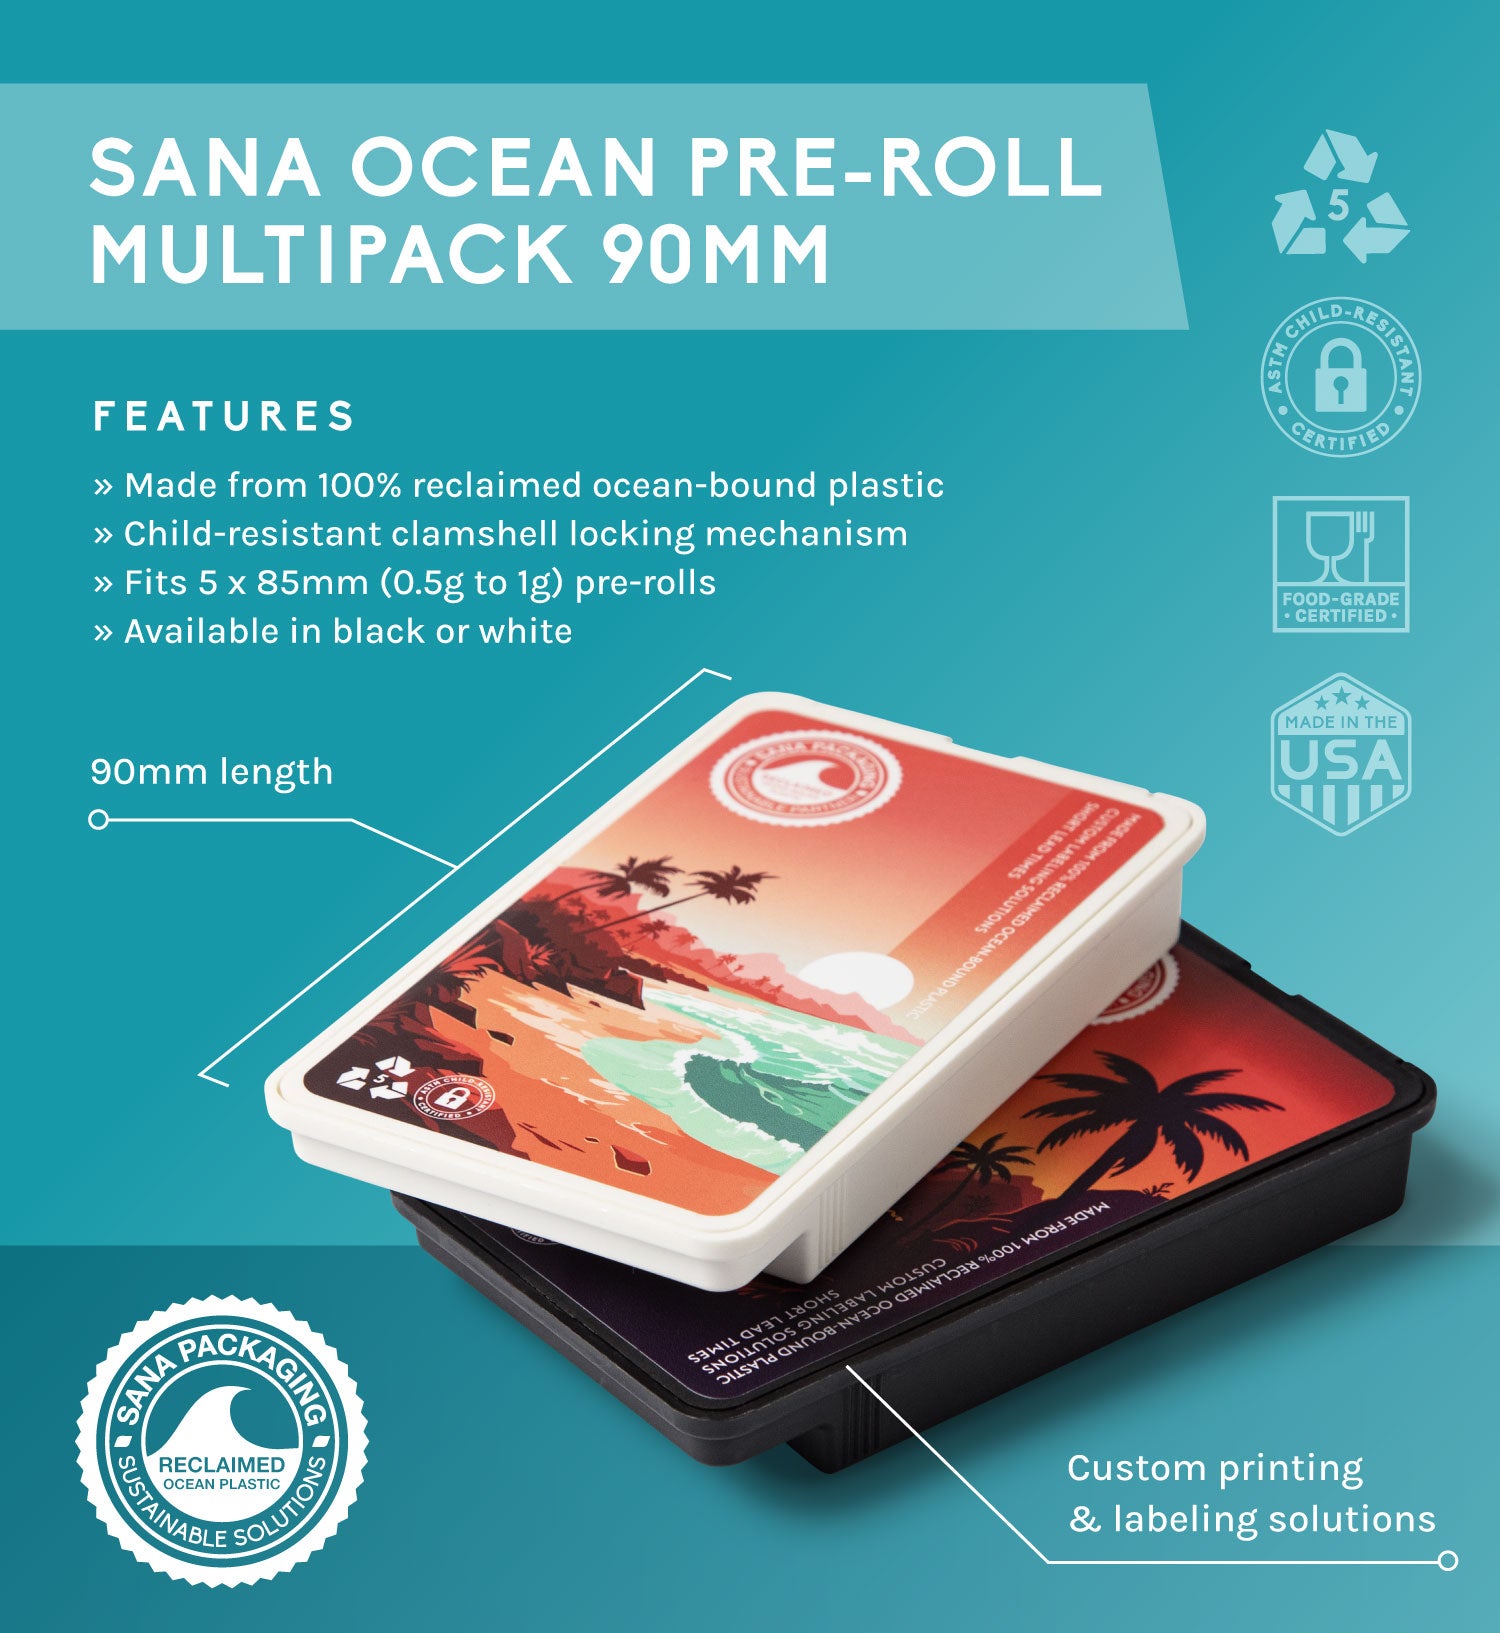 Sana Ocean Pre-Roll Multipack 90mm